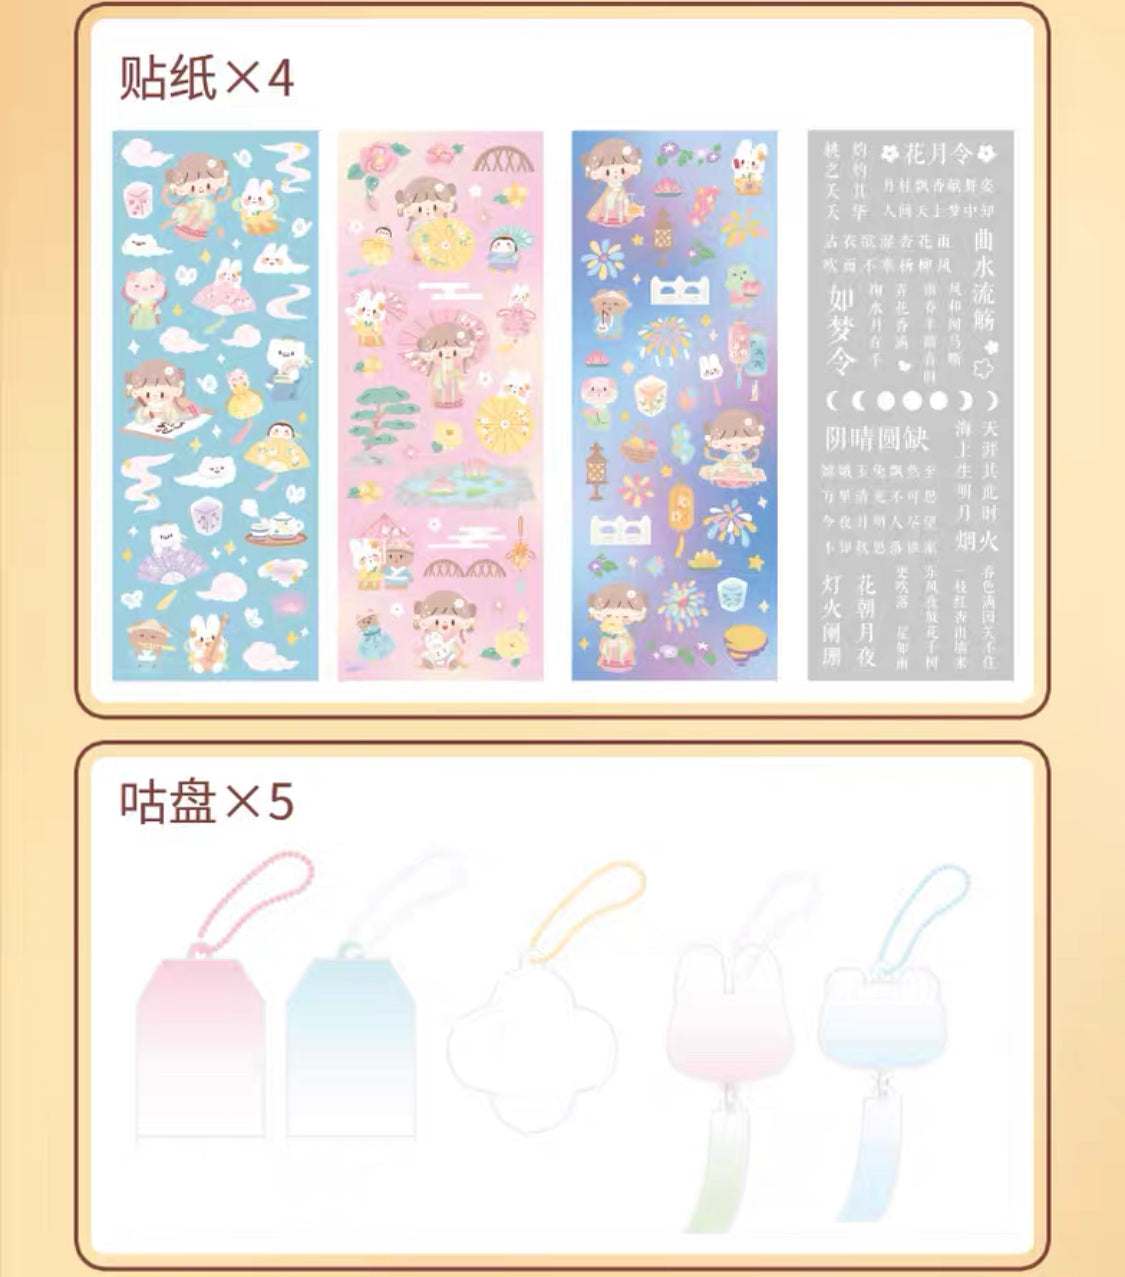 Molinta × M&G shop ancient style series stationery set